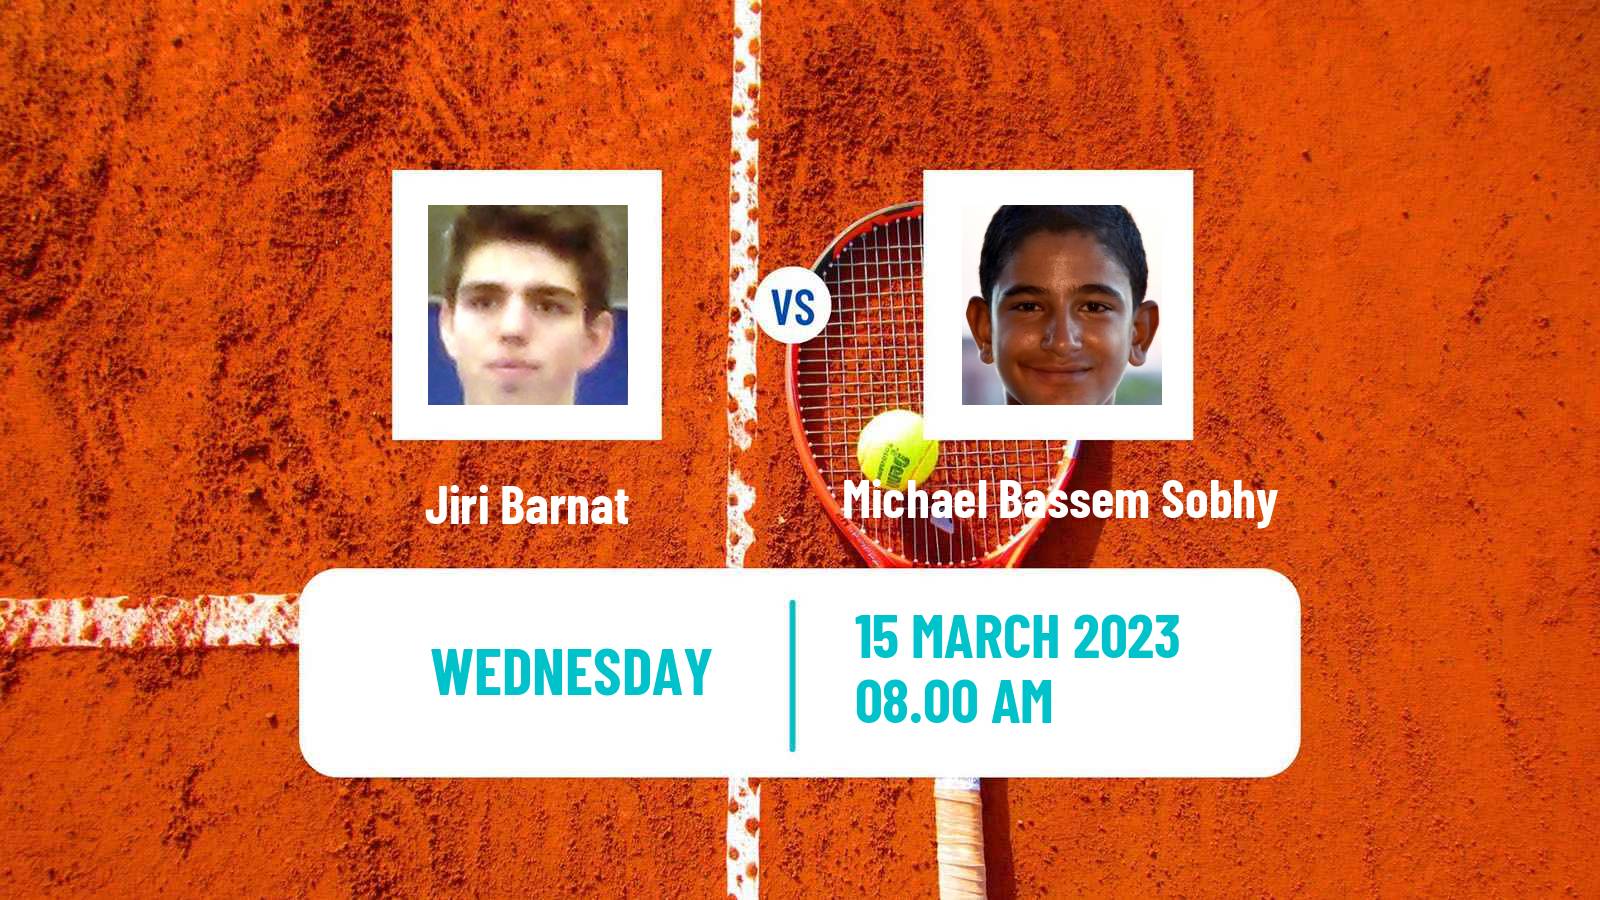 Tennis ITF Tournaments Jiri Barnat - Michael Bassem Sobhy